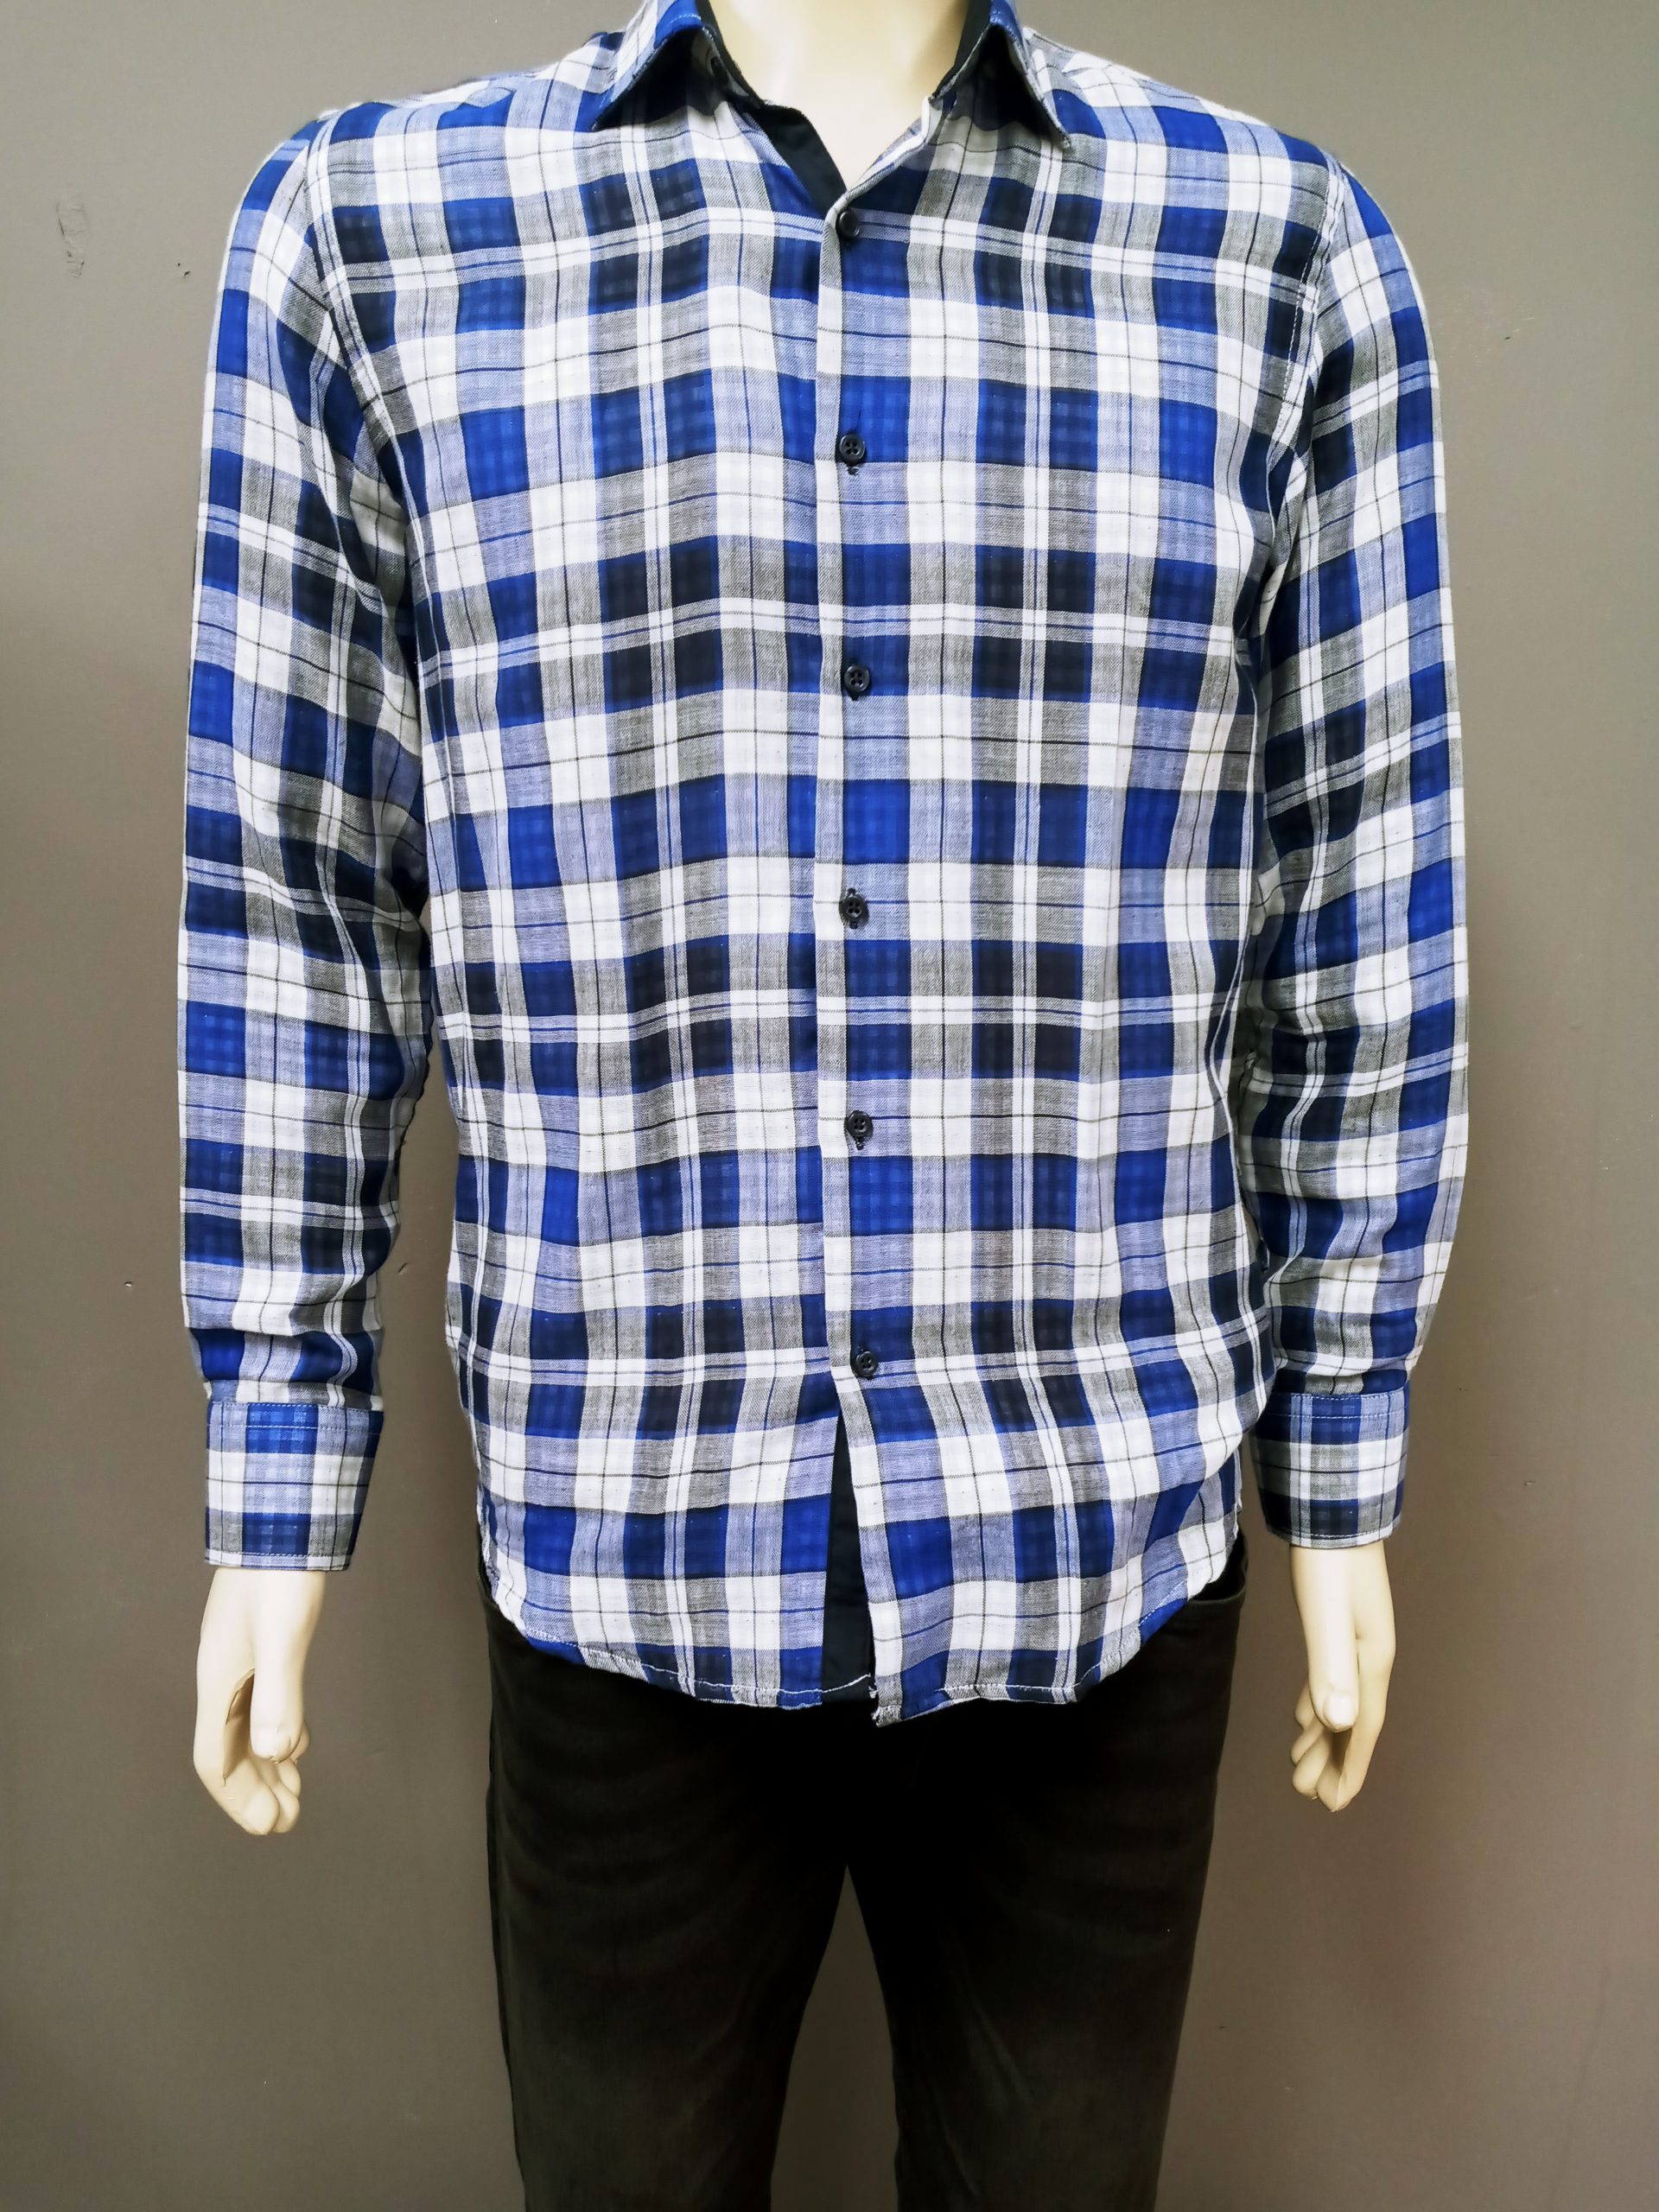 ARAMIDE Blue Plaid Linen Shirt The Store of Quality Fashion Items ...